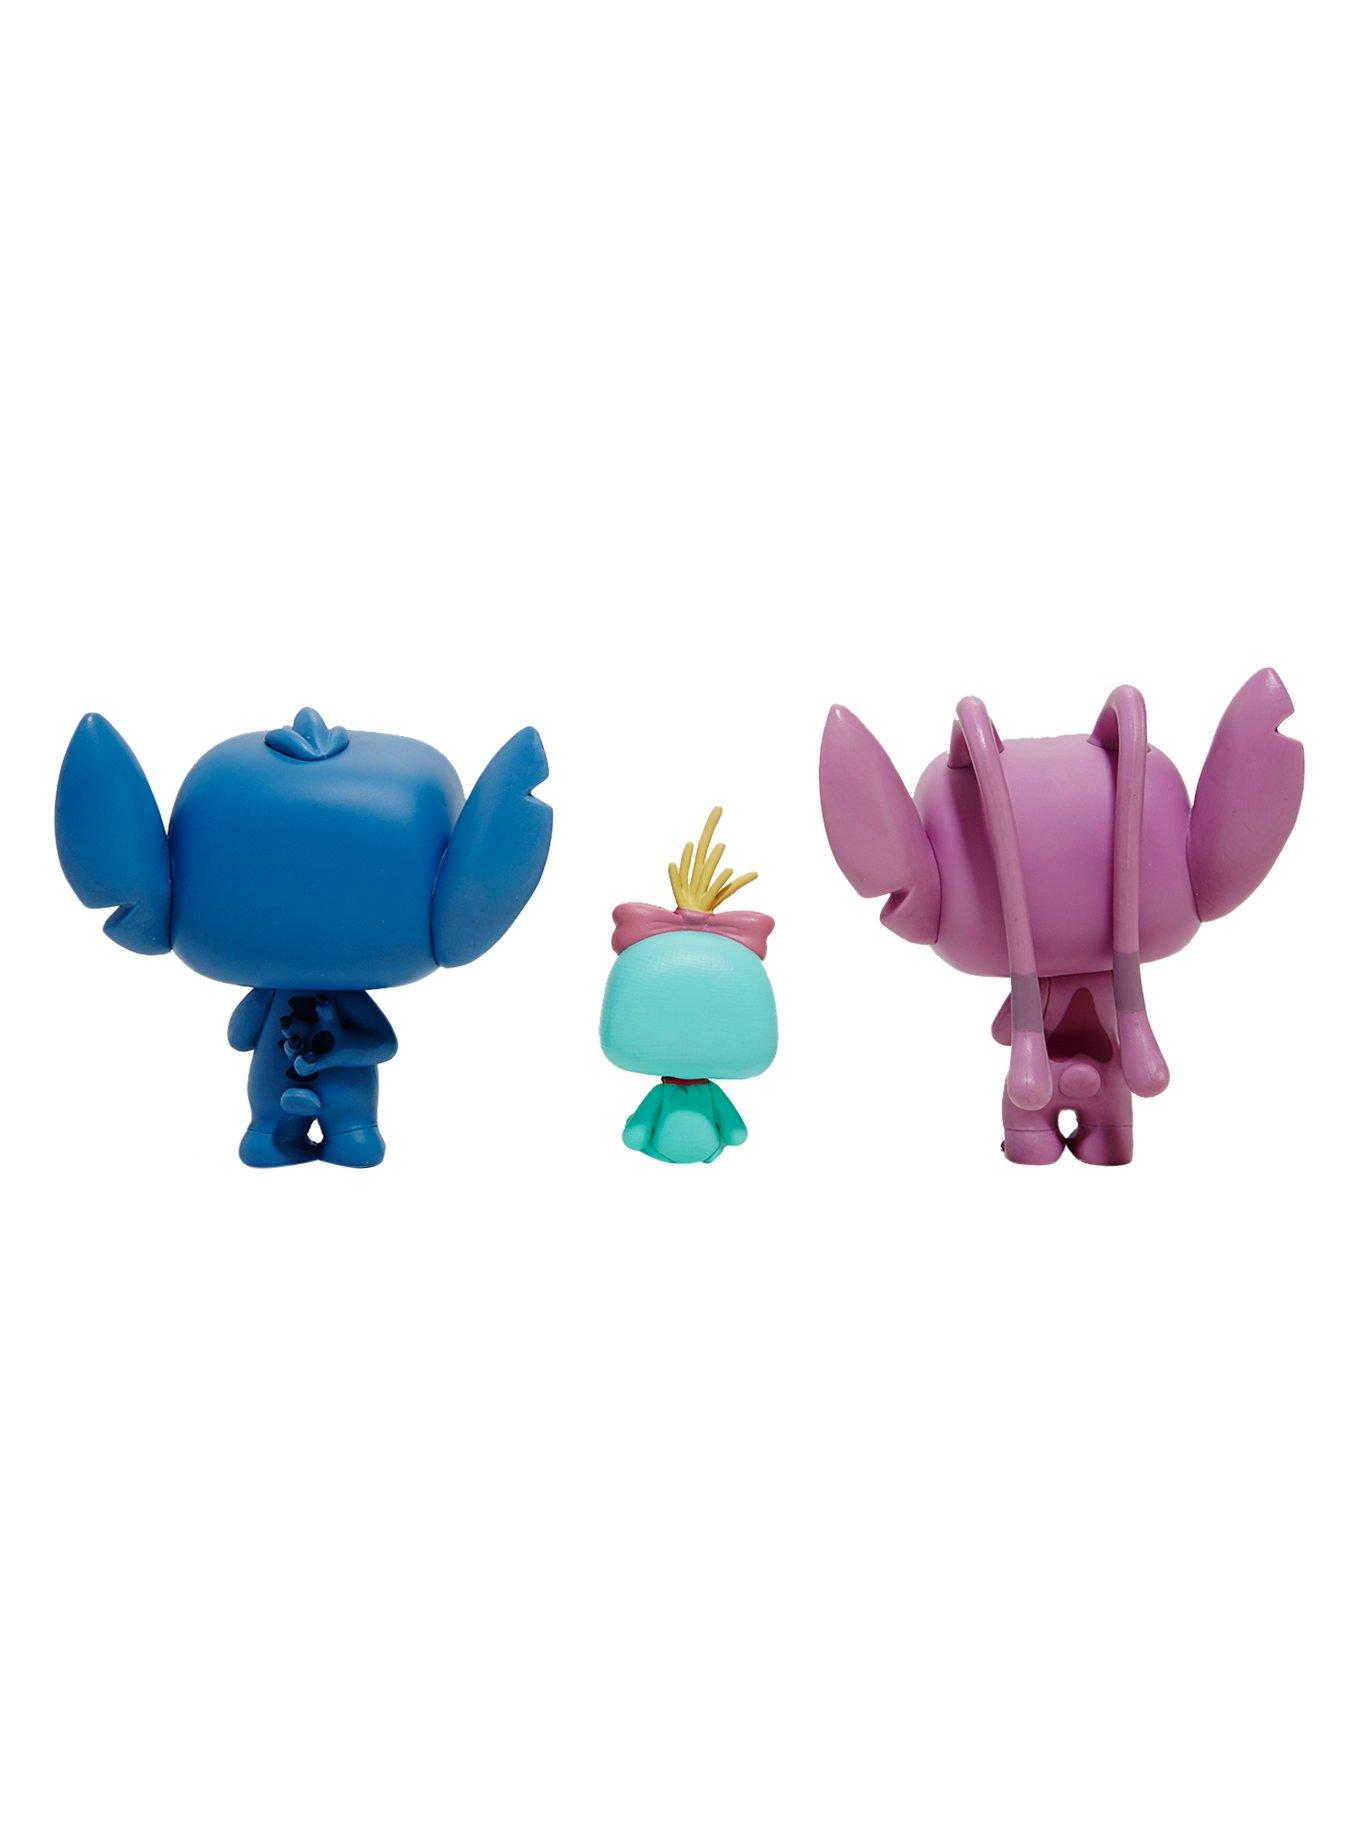 POP! Disney: Lilo And Stitch, Stitch /Scrump / Angel (3-Pack